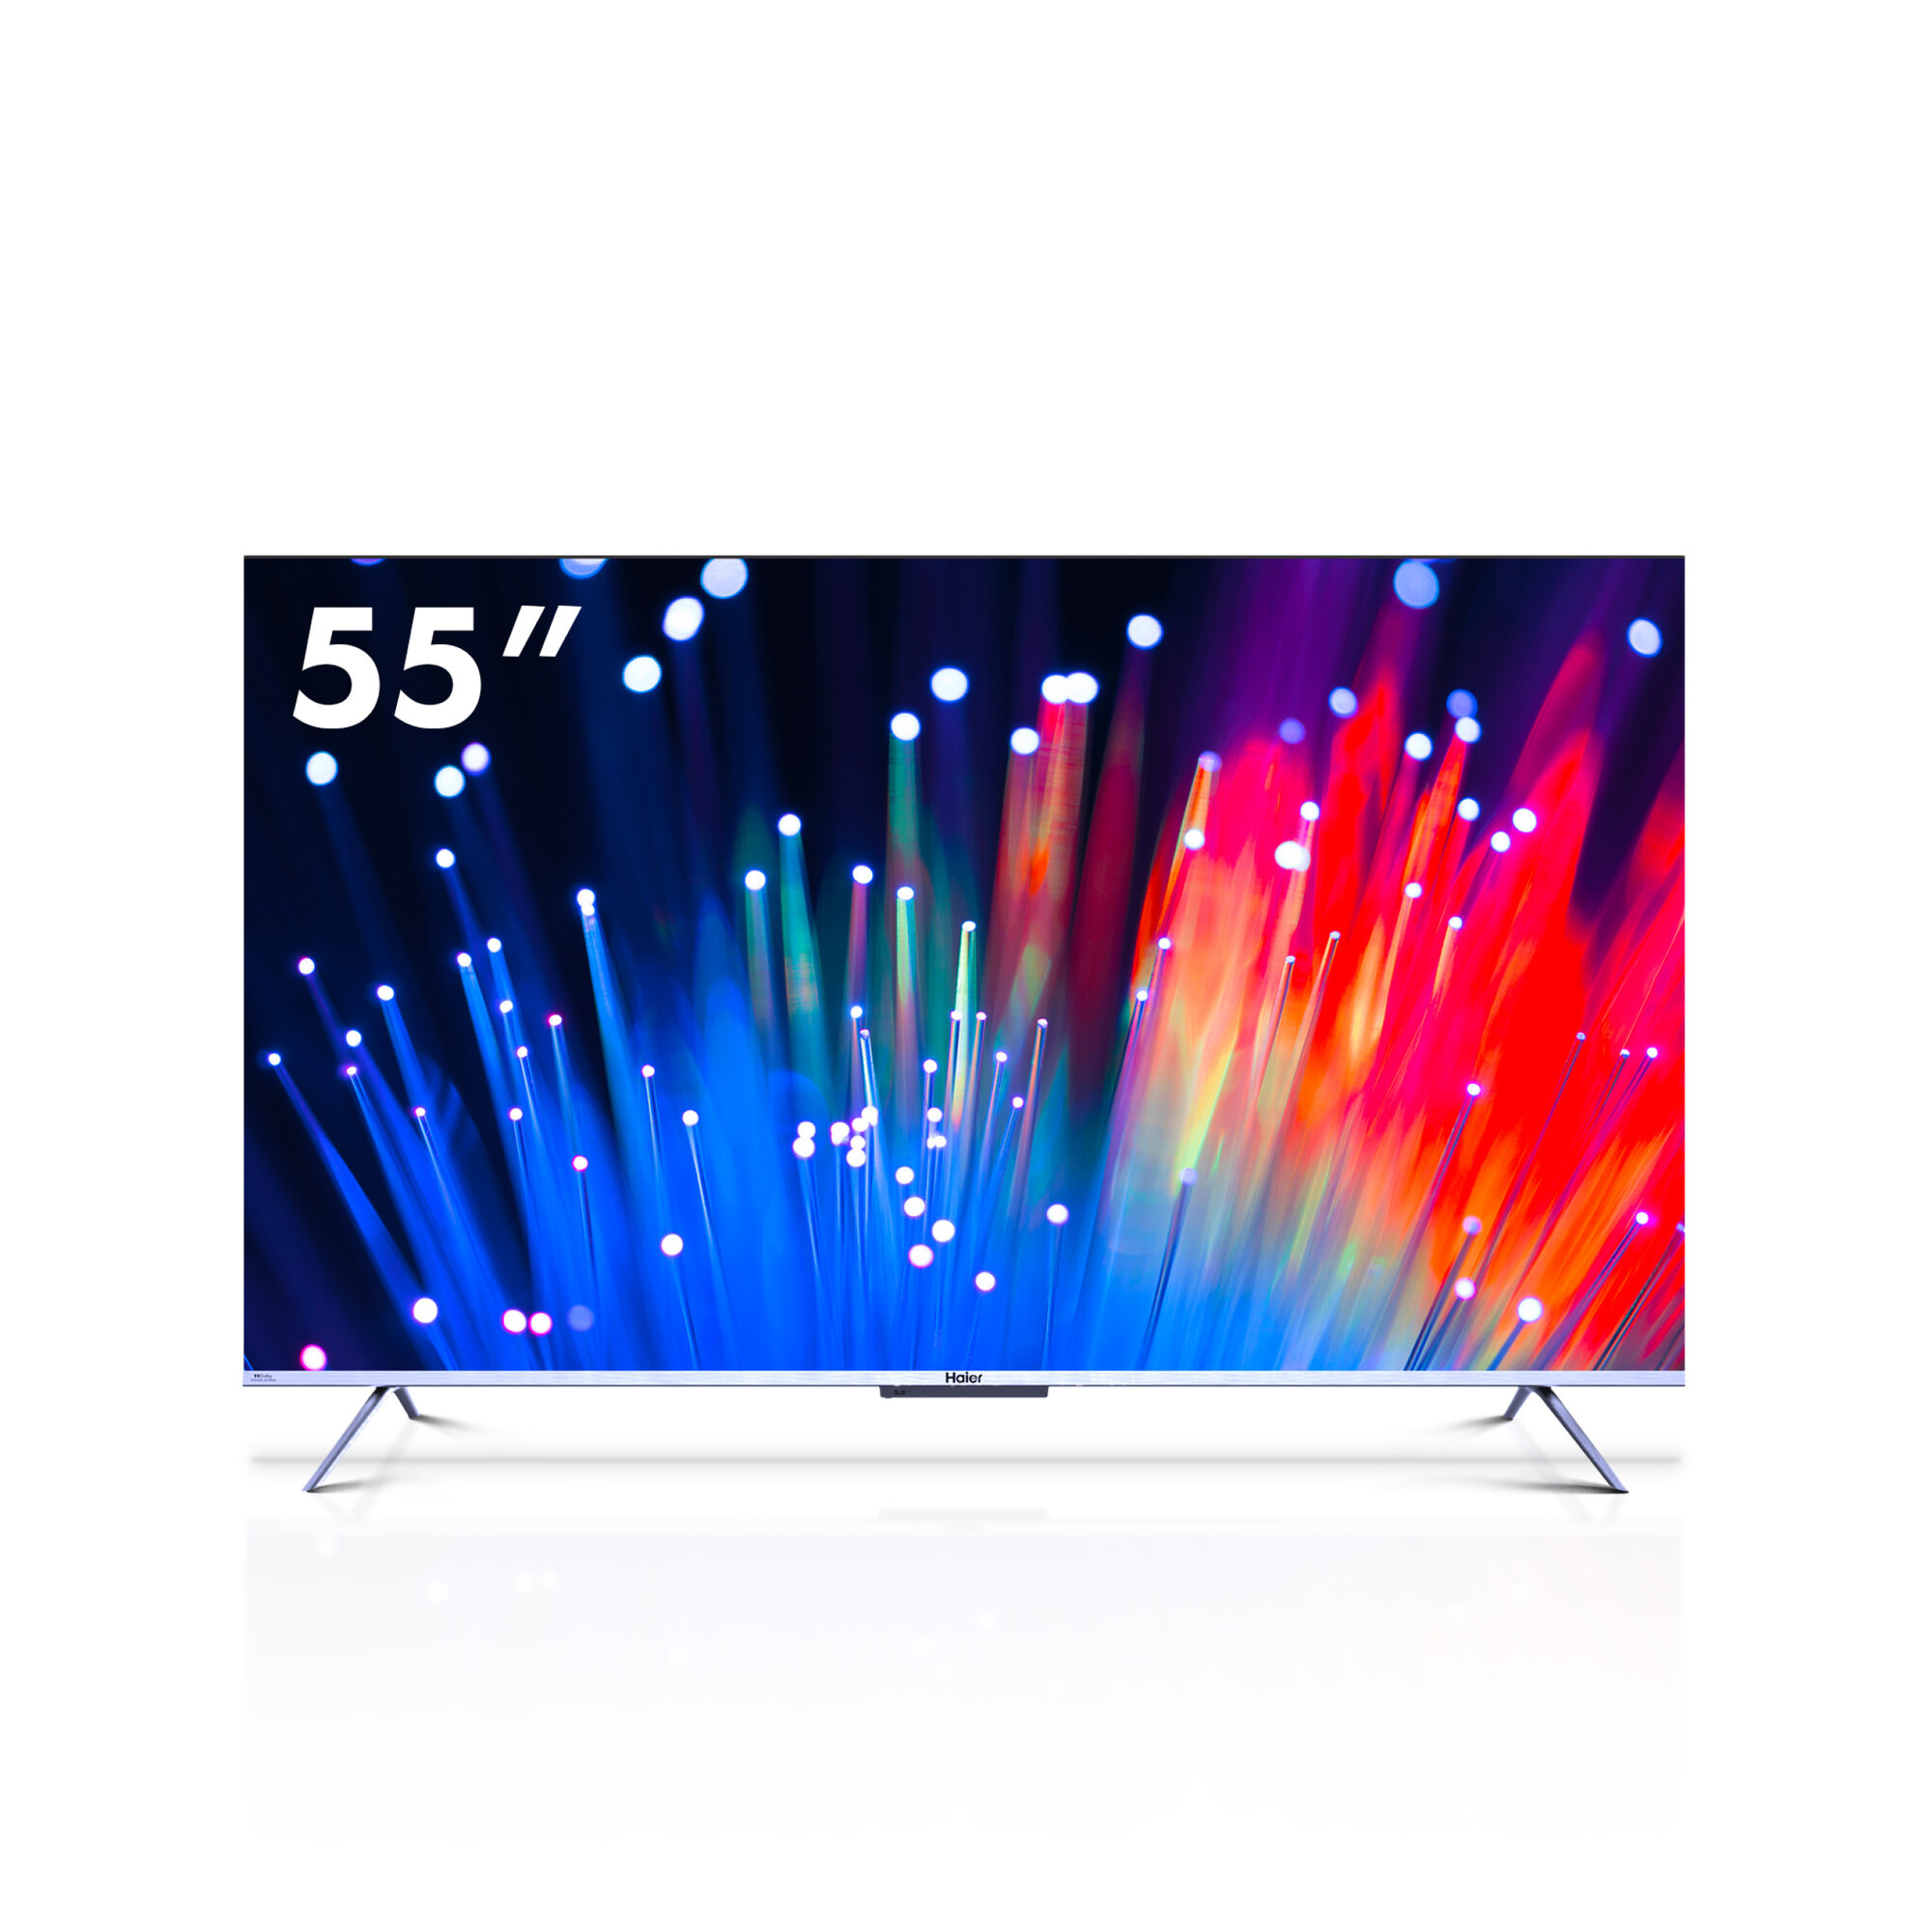 55" Телевизор Haier 55 Smart TV S3 HDR, LED, QLED, серый